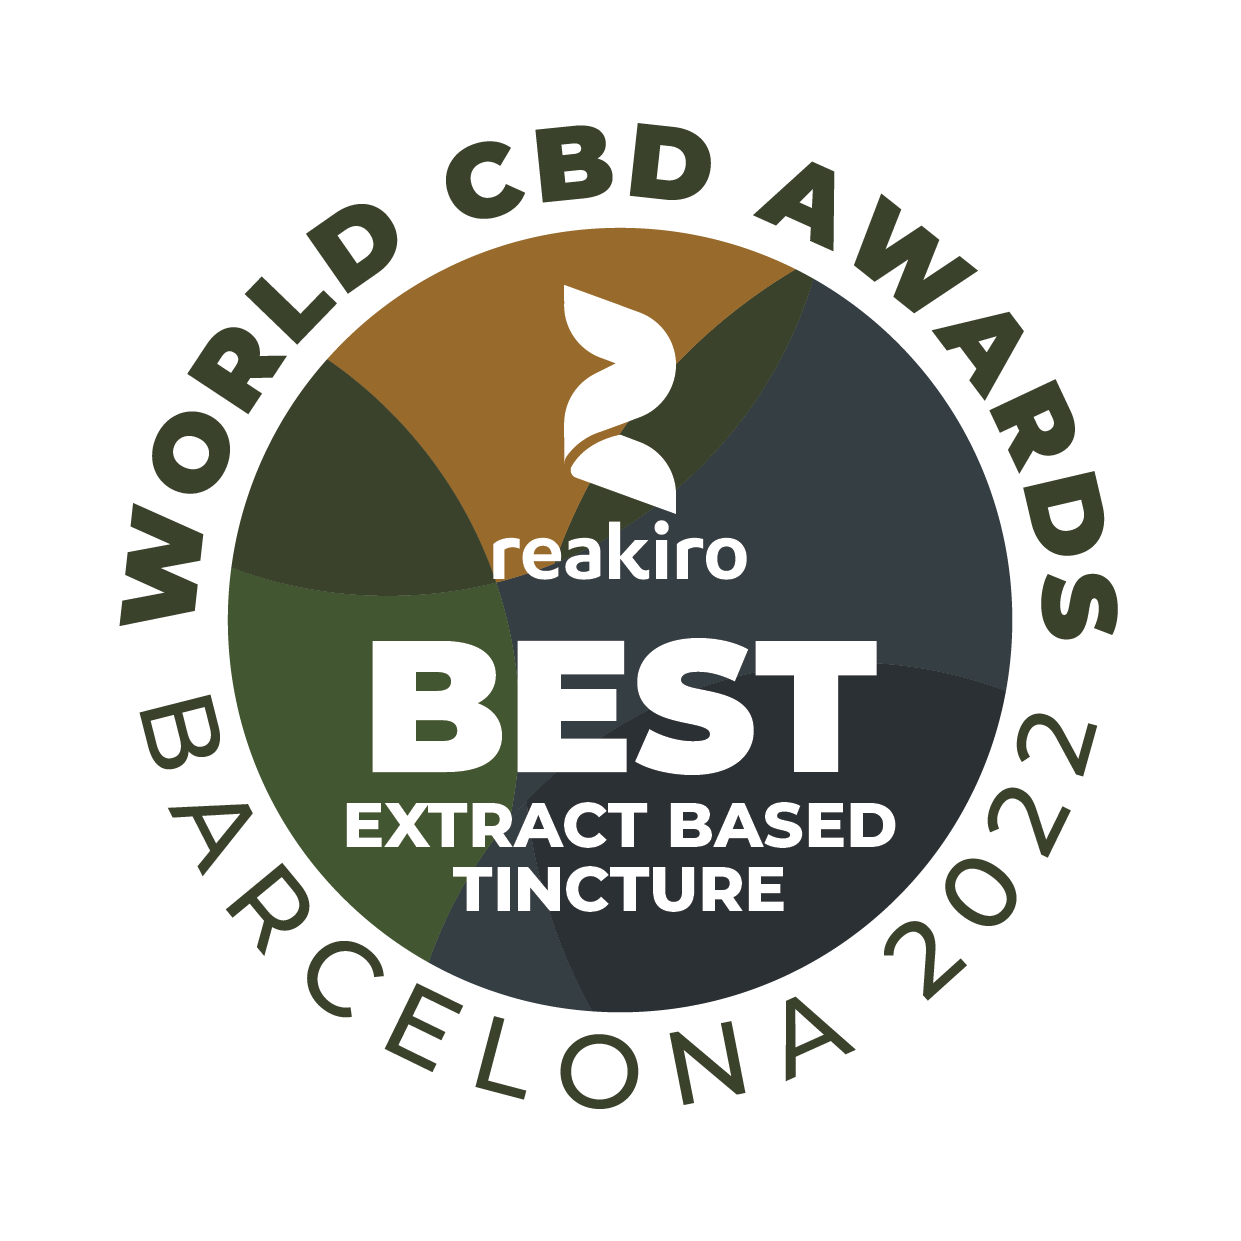 Reakiro CBD Best Extract based tincture